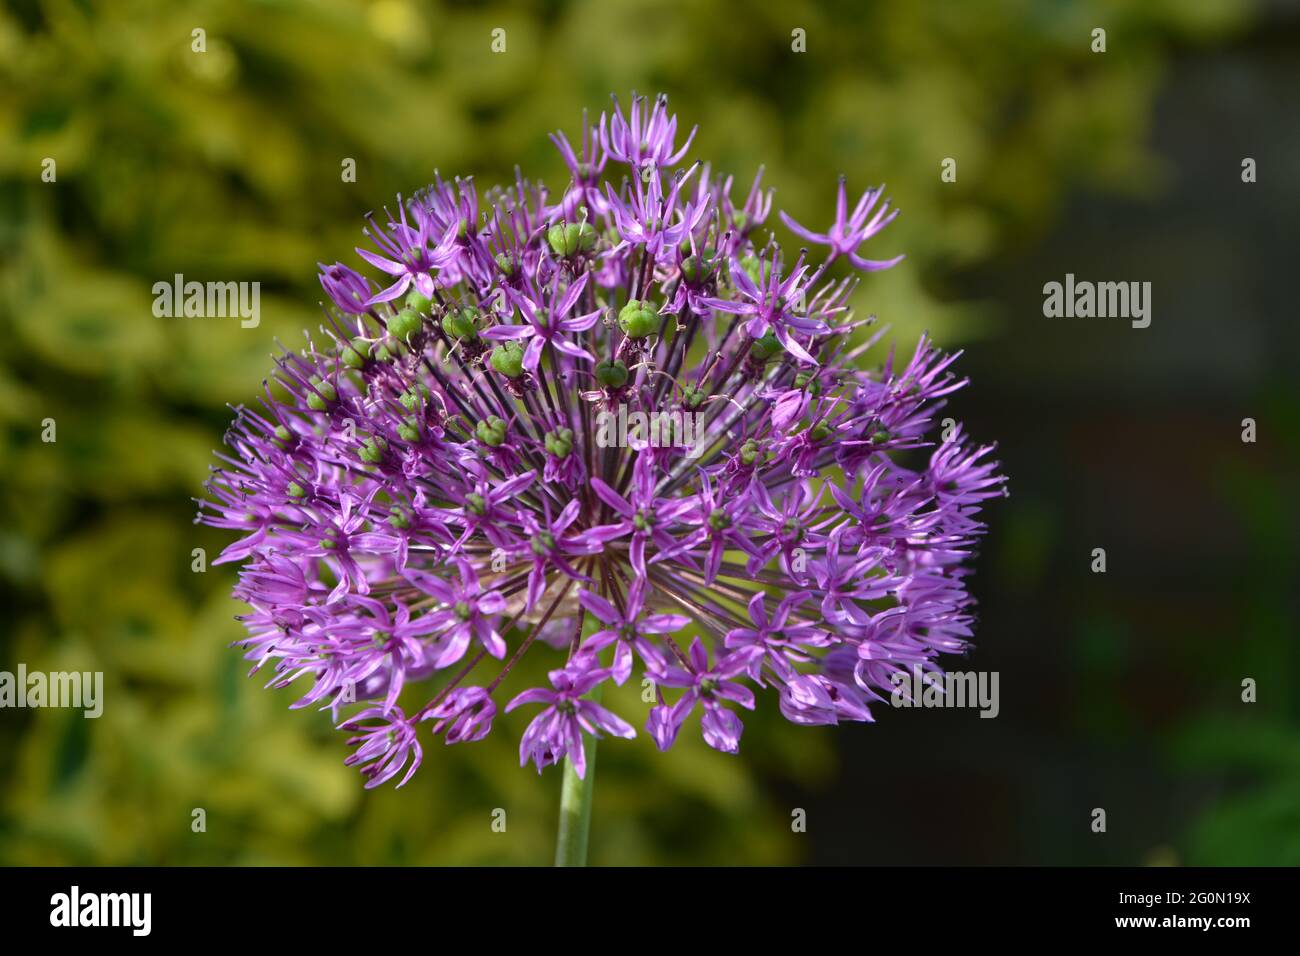 Allium giganteum 'Gladiator', Purple Flower Cambridge UK, Purely Beautiful and Peaceful Space Stock Photo